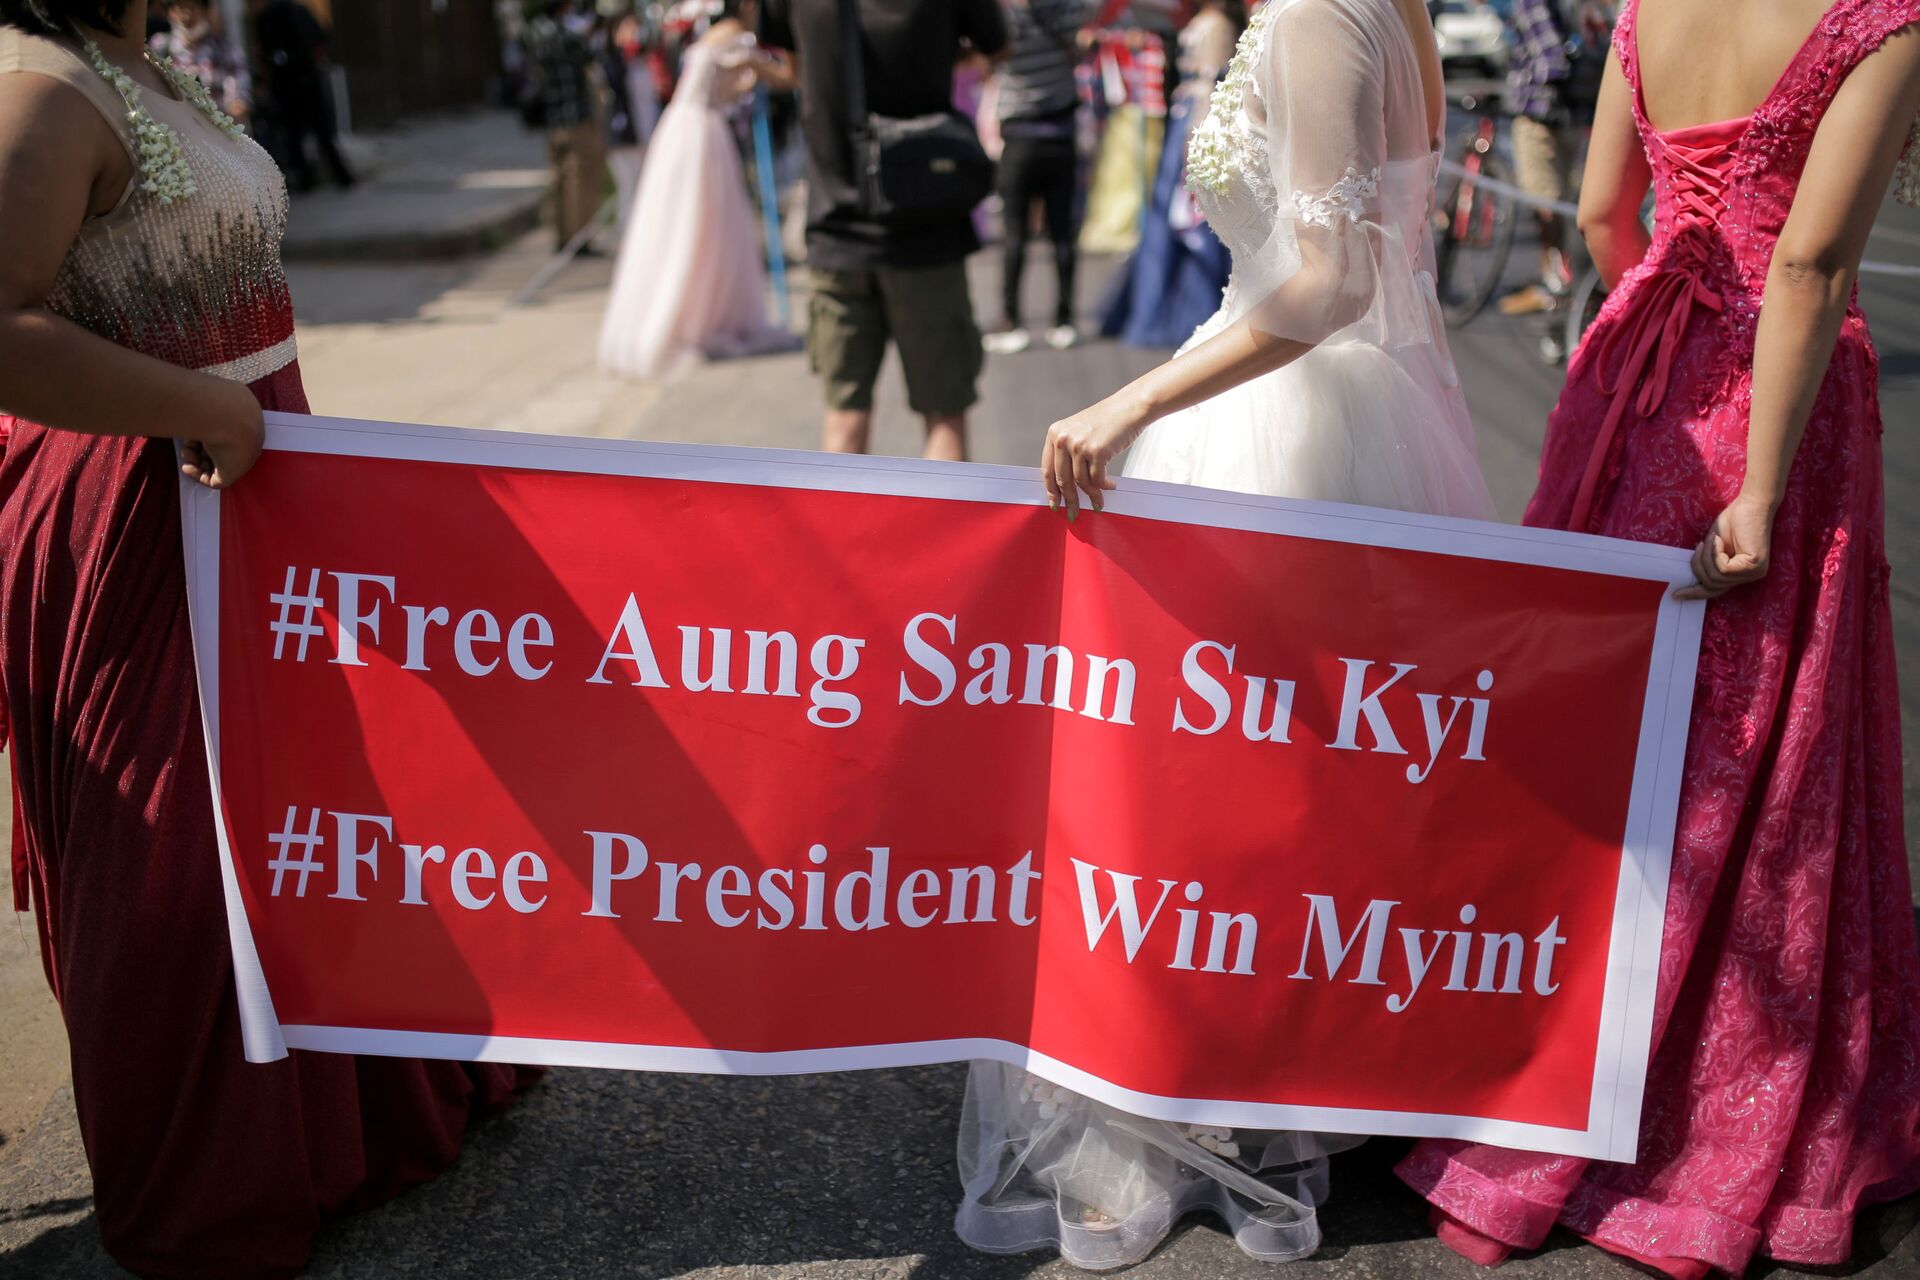 Court Hearing for Myanmar's Aung San Suu Kyi Delayed Till Wednesday, Report Says - Sputnik International, 1920, 15.02.2021